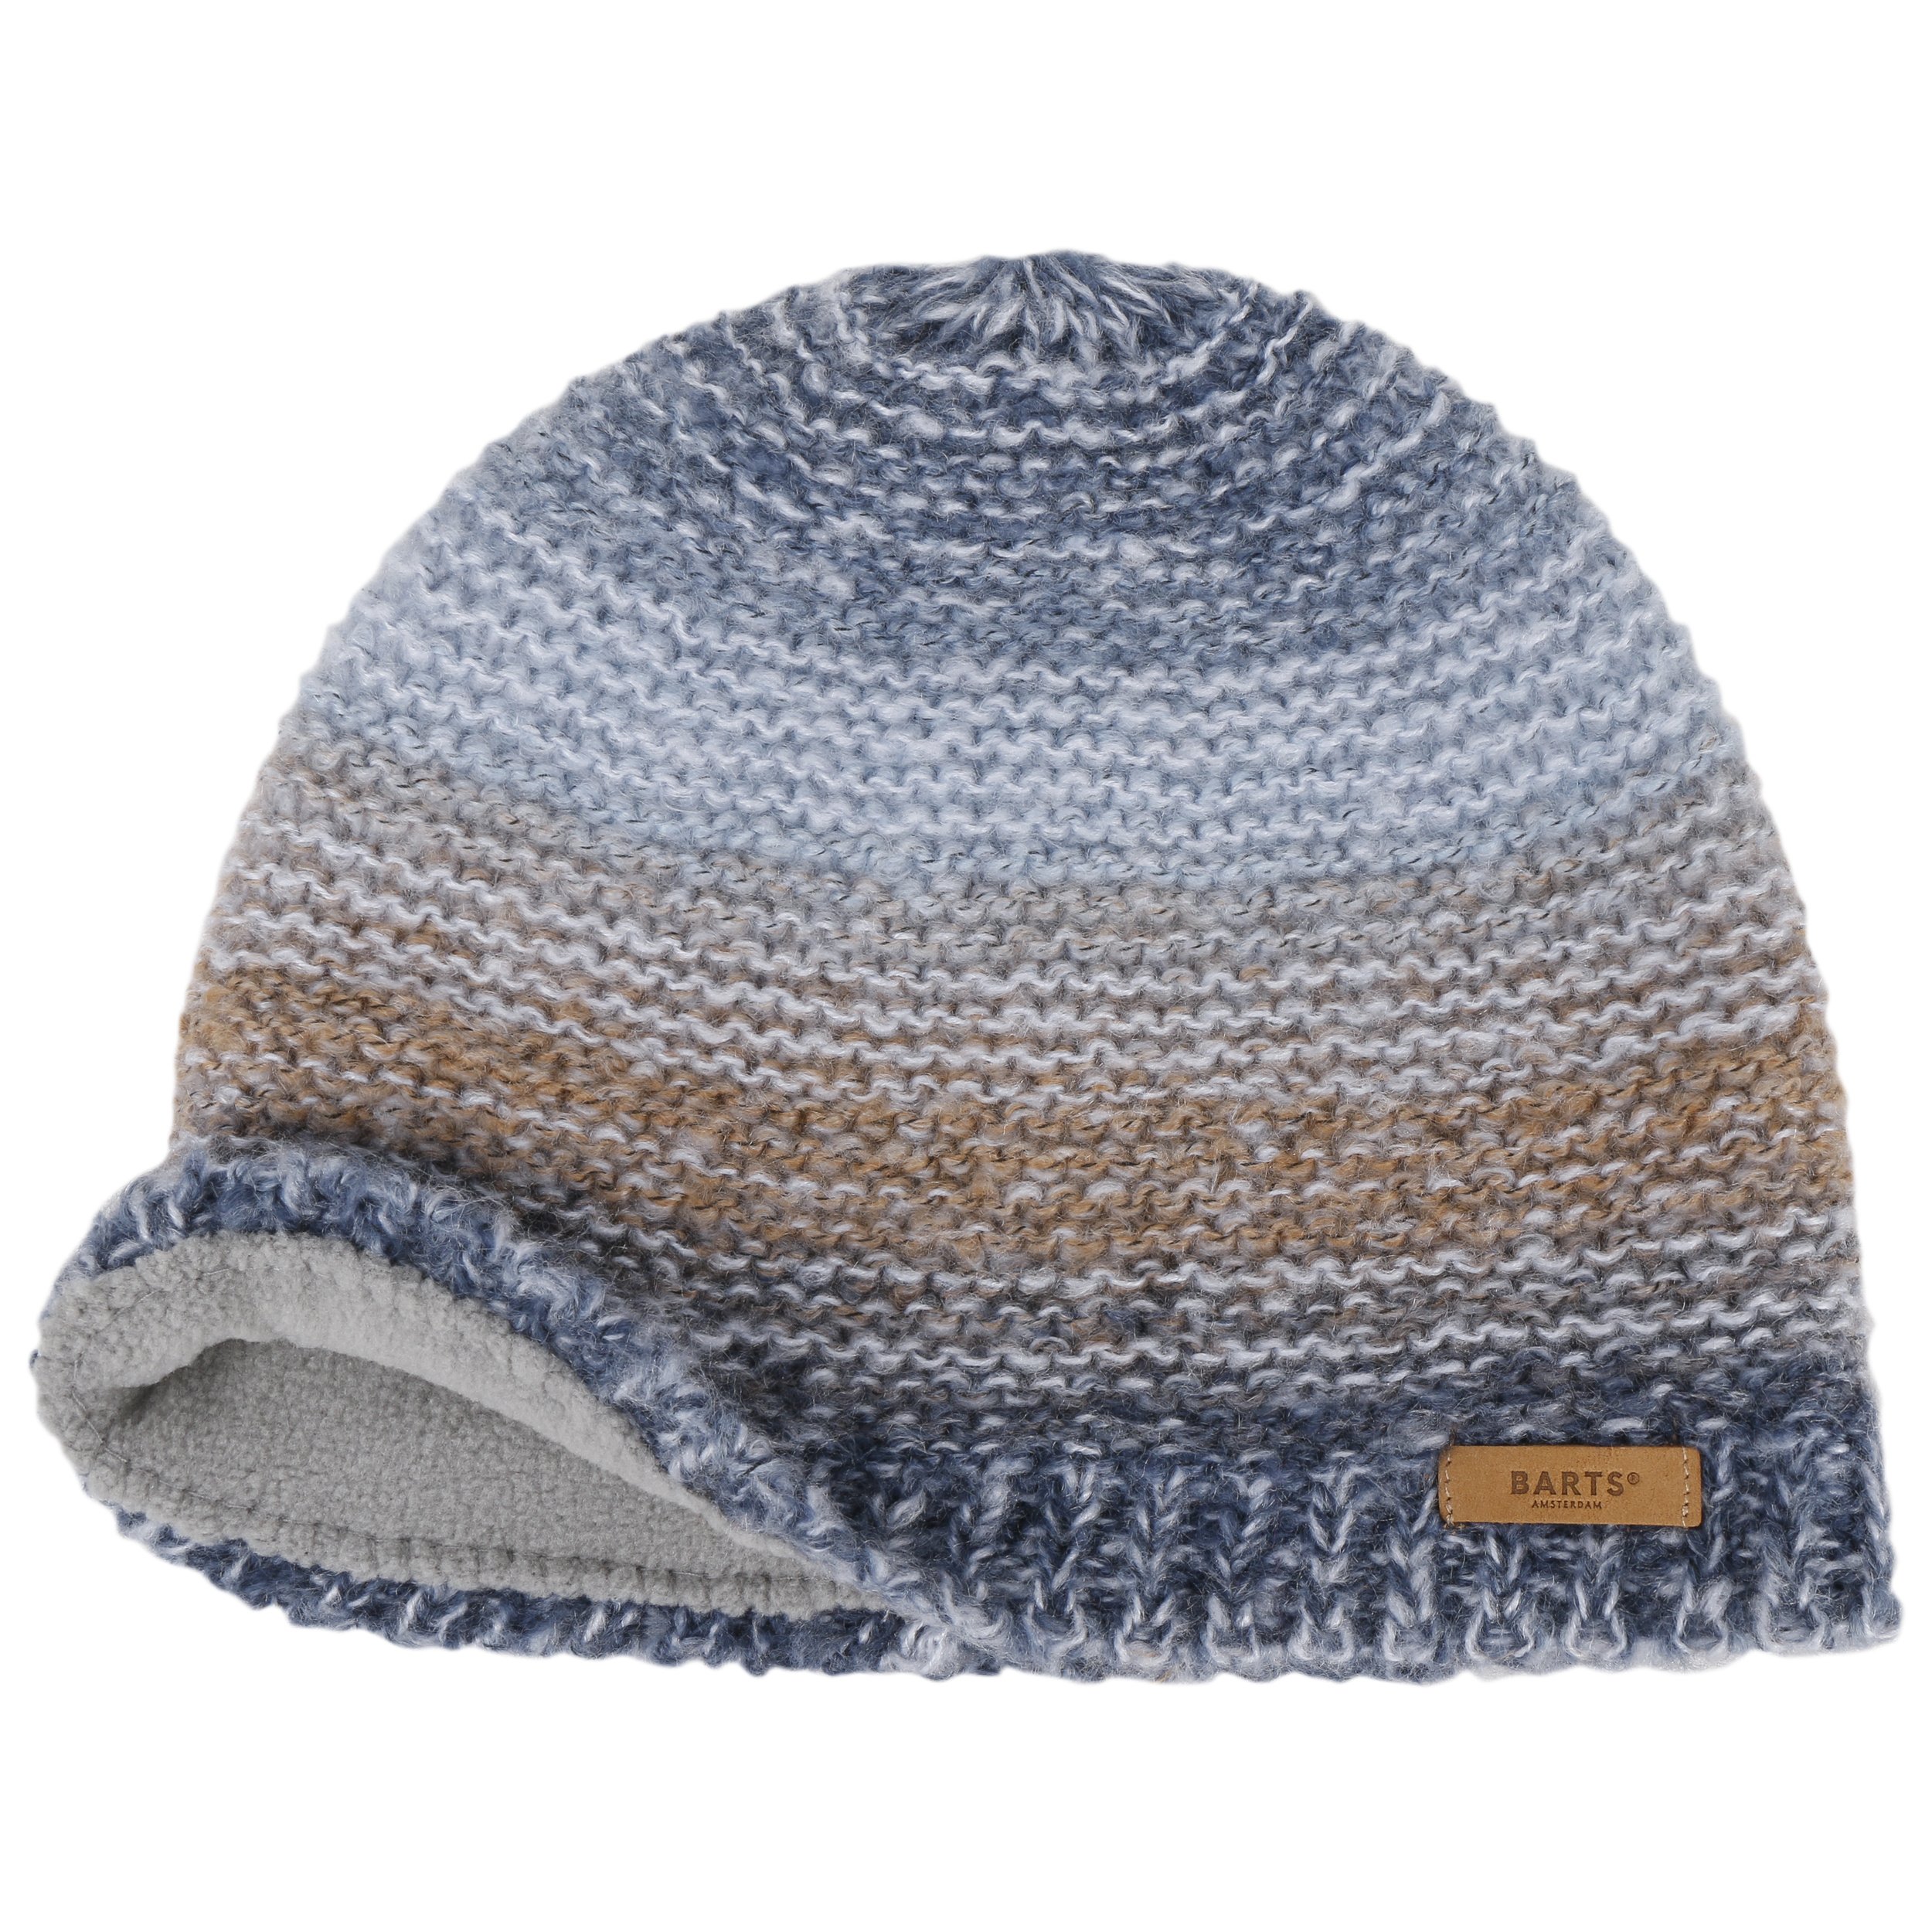 Subjectief pik Defecte Meuse Beanie Hat by Barts - 32,95 €